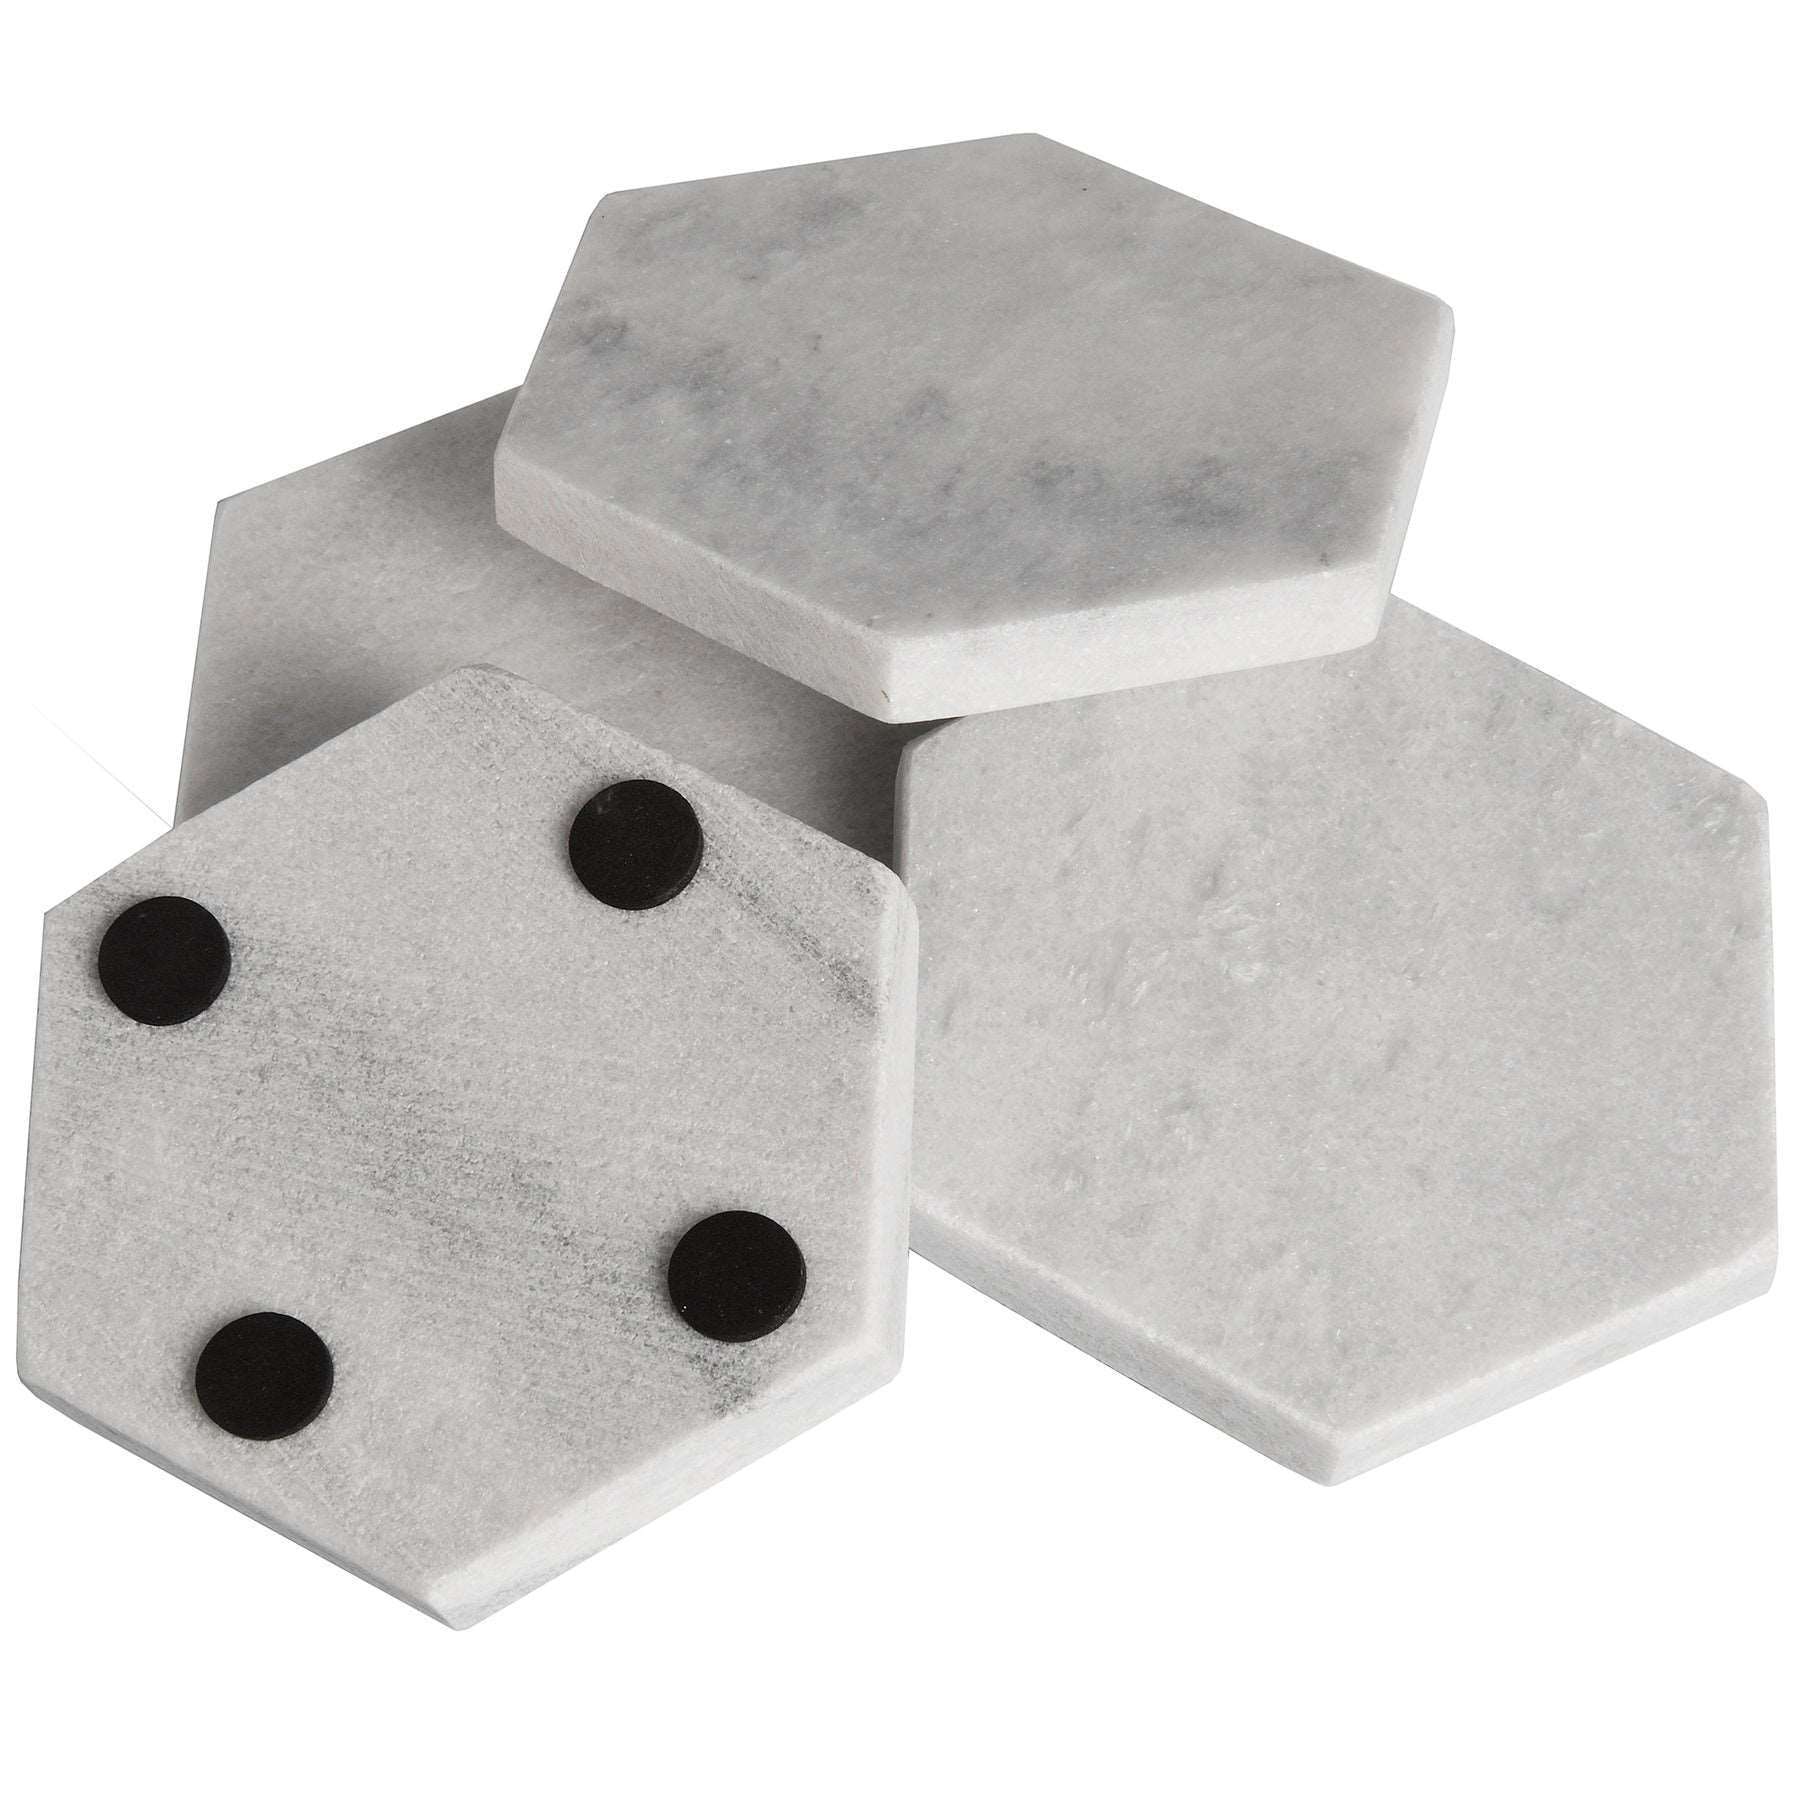 Numero Grey Marble Hexagonal Coasters - Set of 4